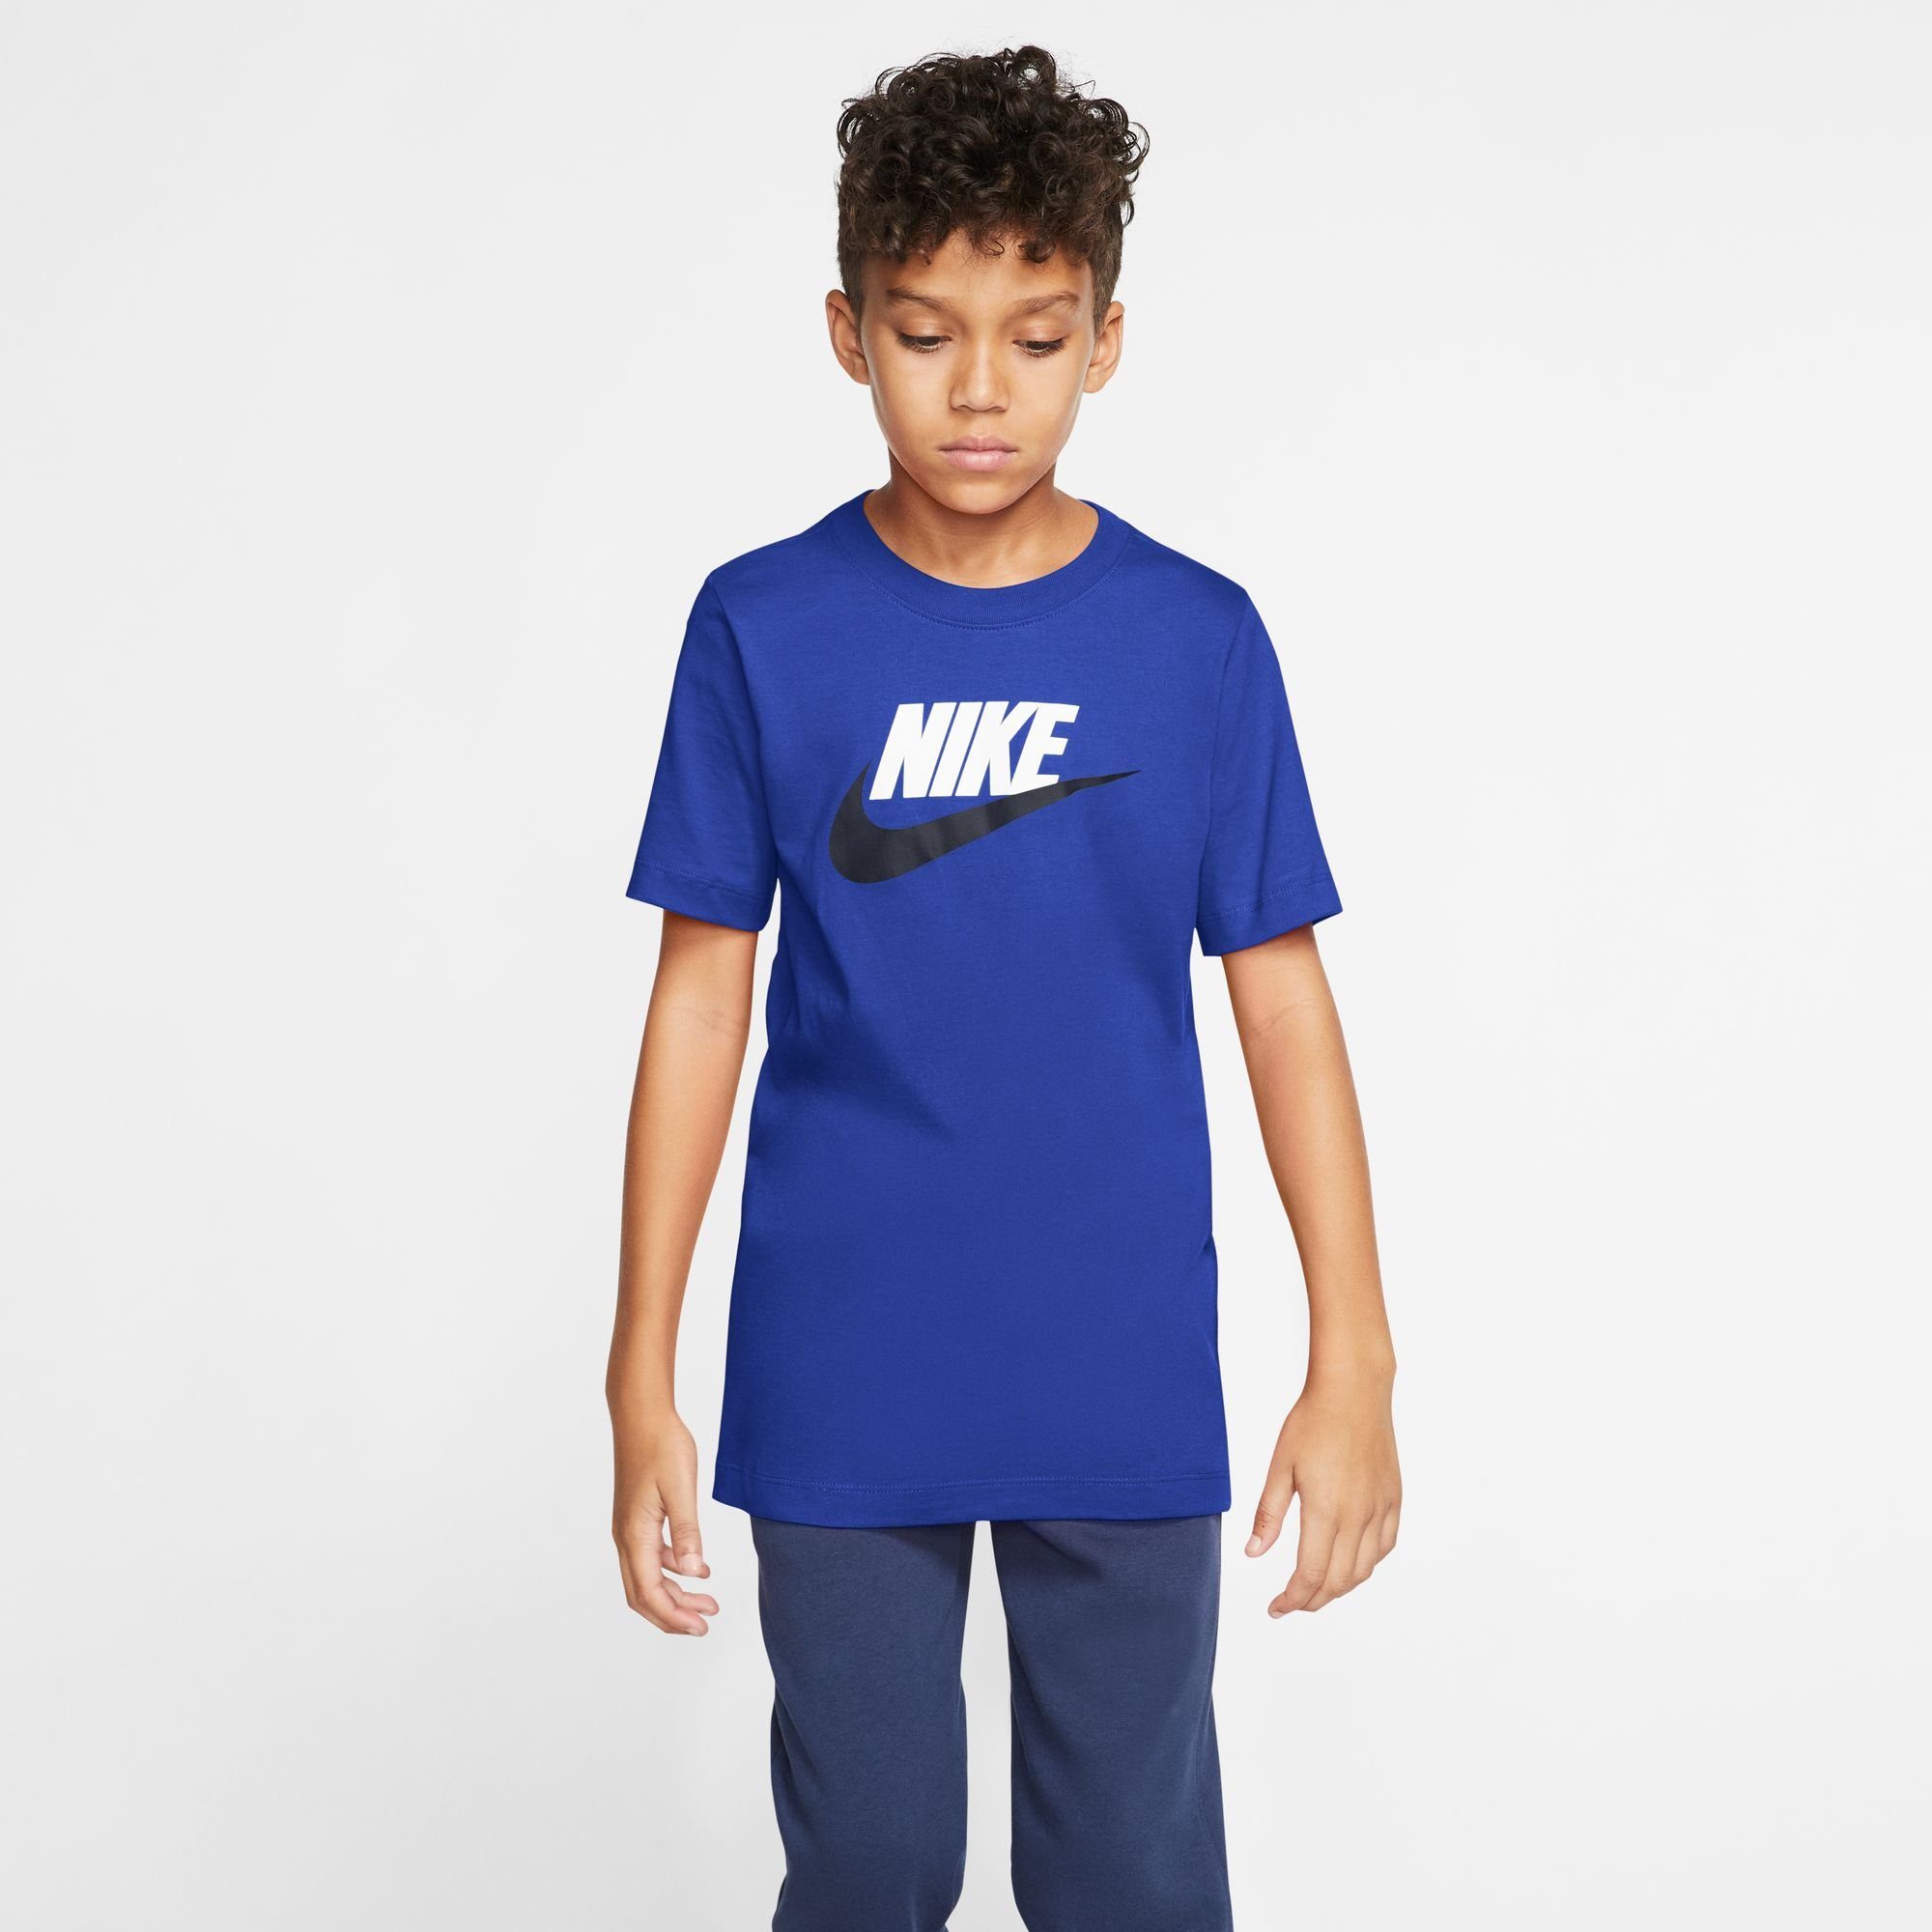 T-SHIRT NAVY GAME T-Shirt ROYAL/MIDNIGHT COTTON KIDS' Sportswear BIG Nike